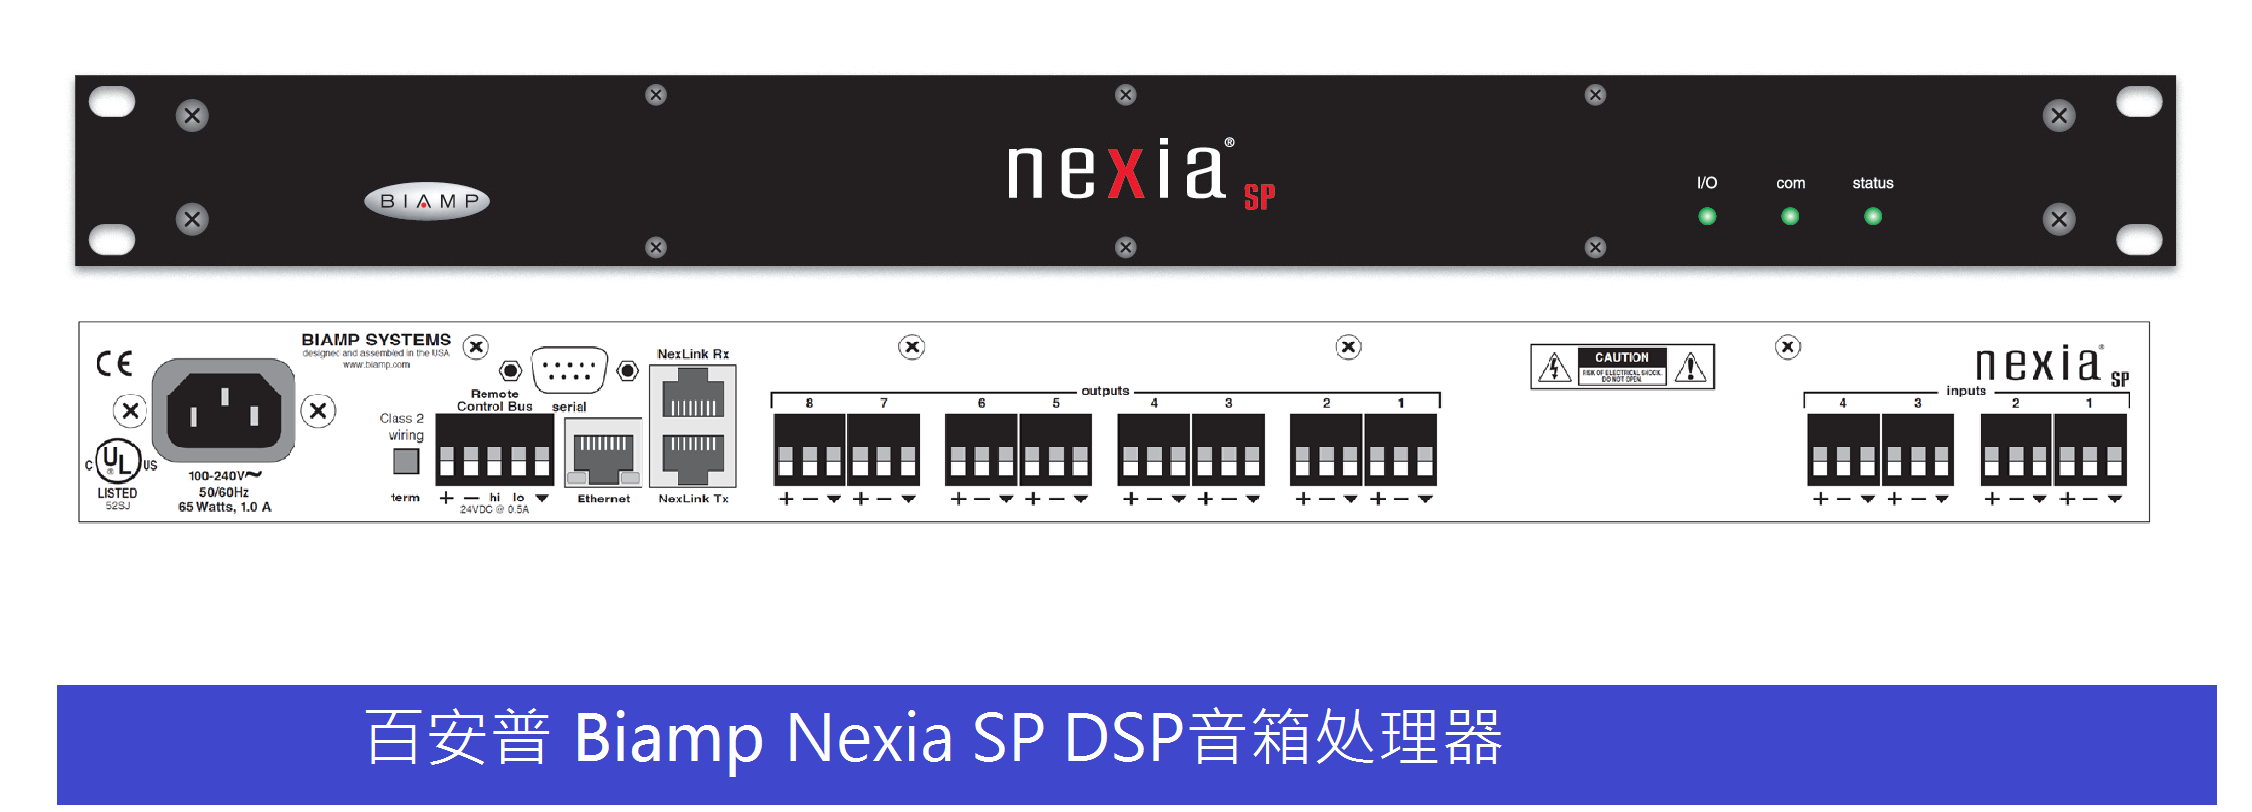 Biamp百安普Nexia SP具有混音、路由、组台、均衡、延时、控制等多种功能